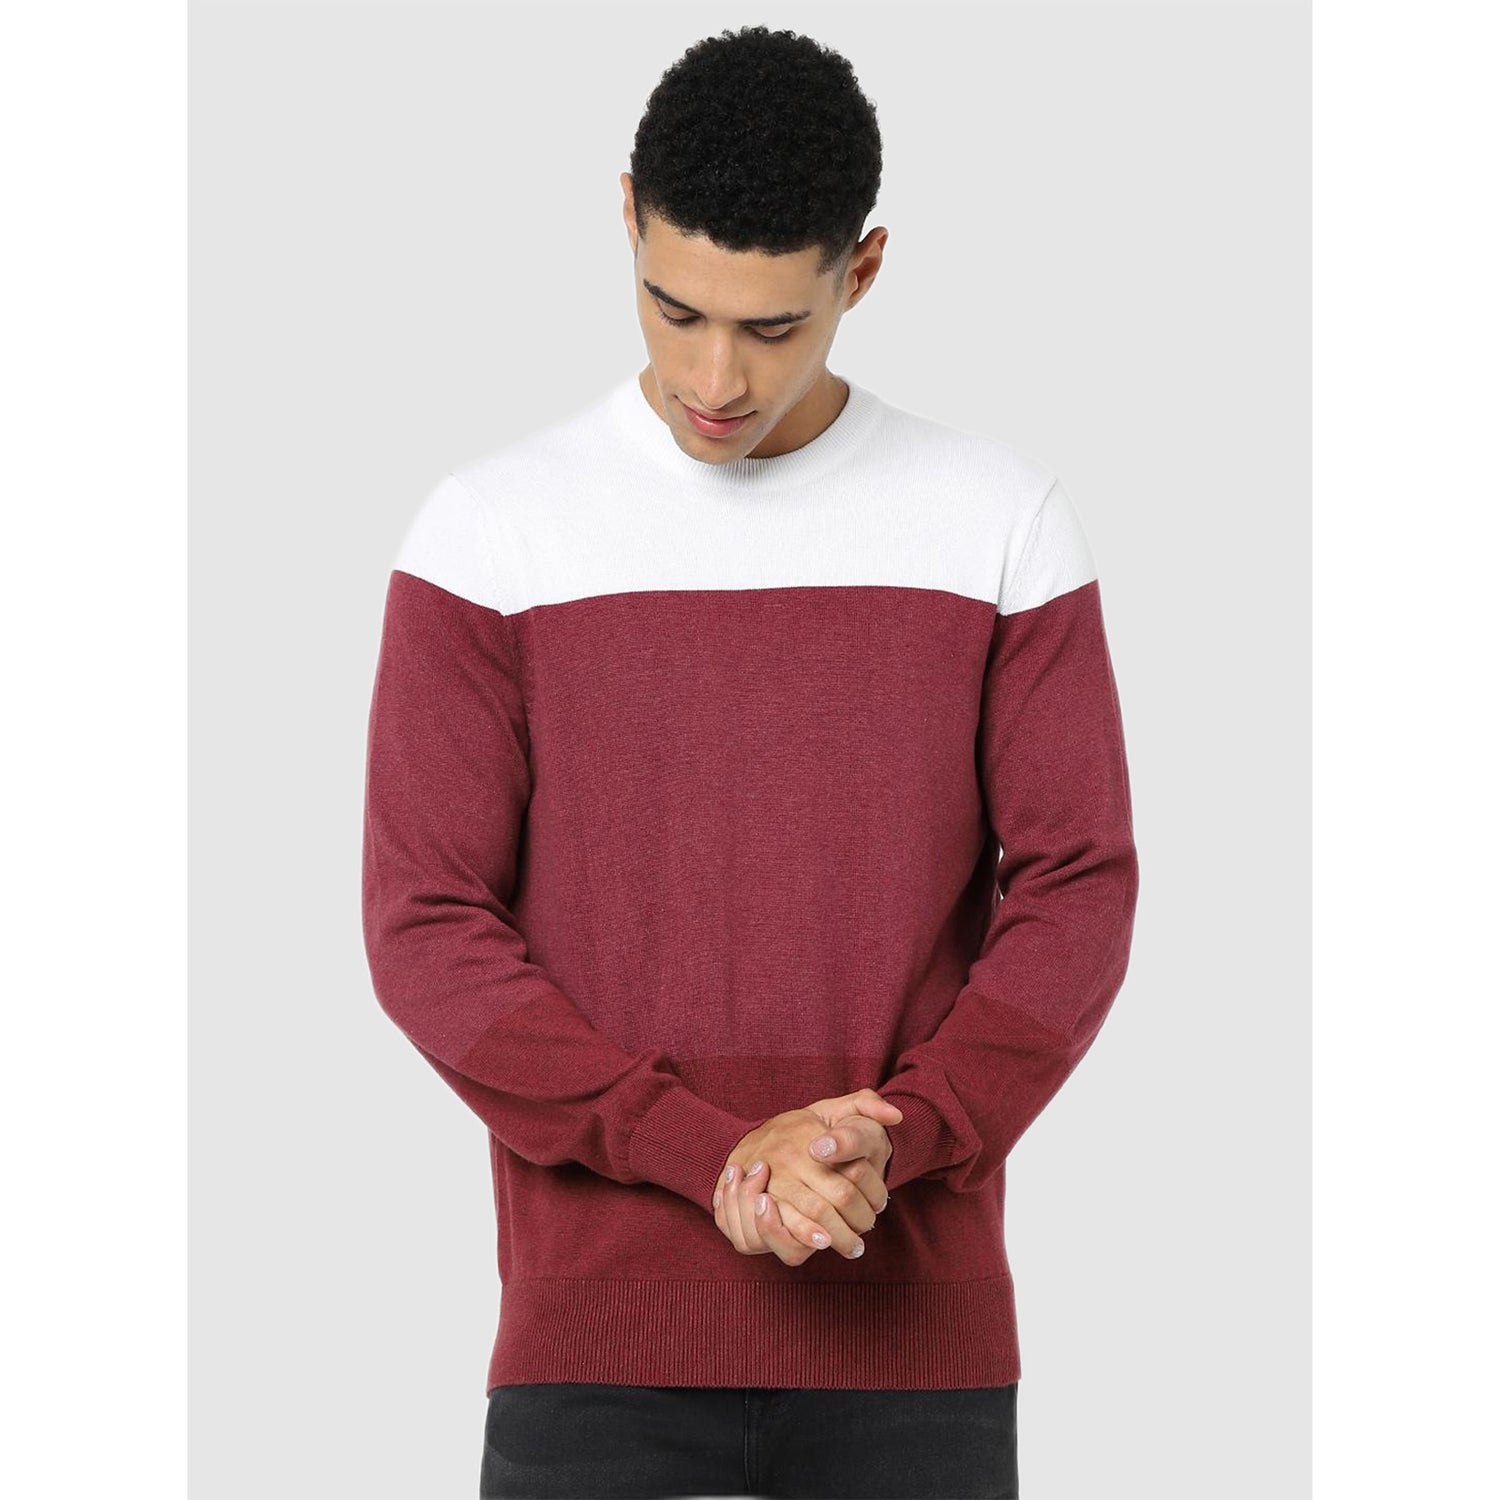 Maroon and White Colourblocked Pullover Sweater (CERAIN)